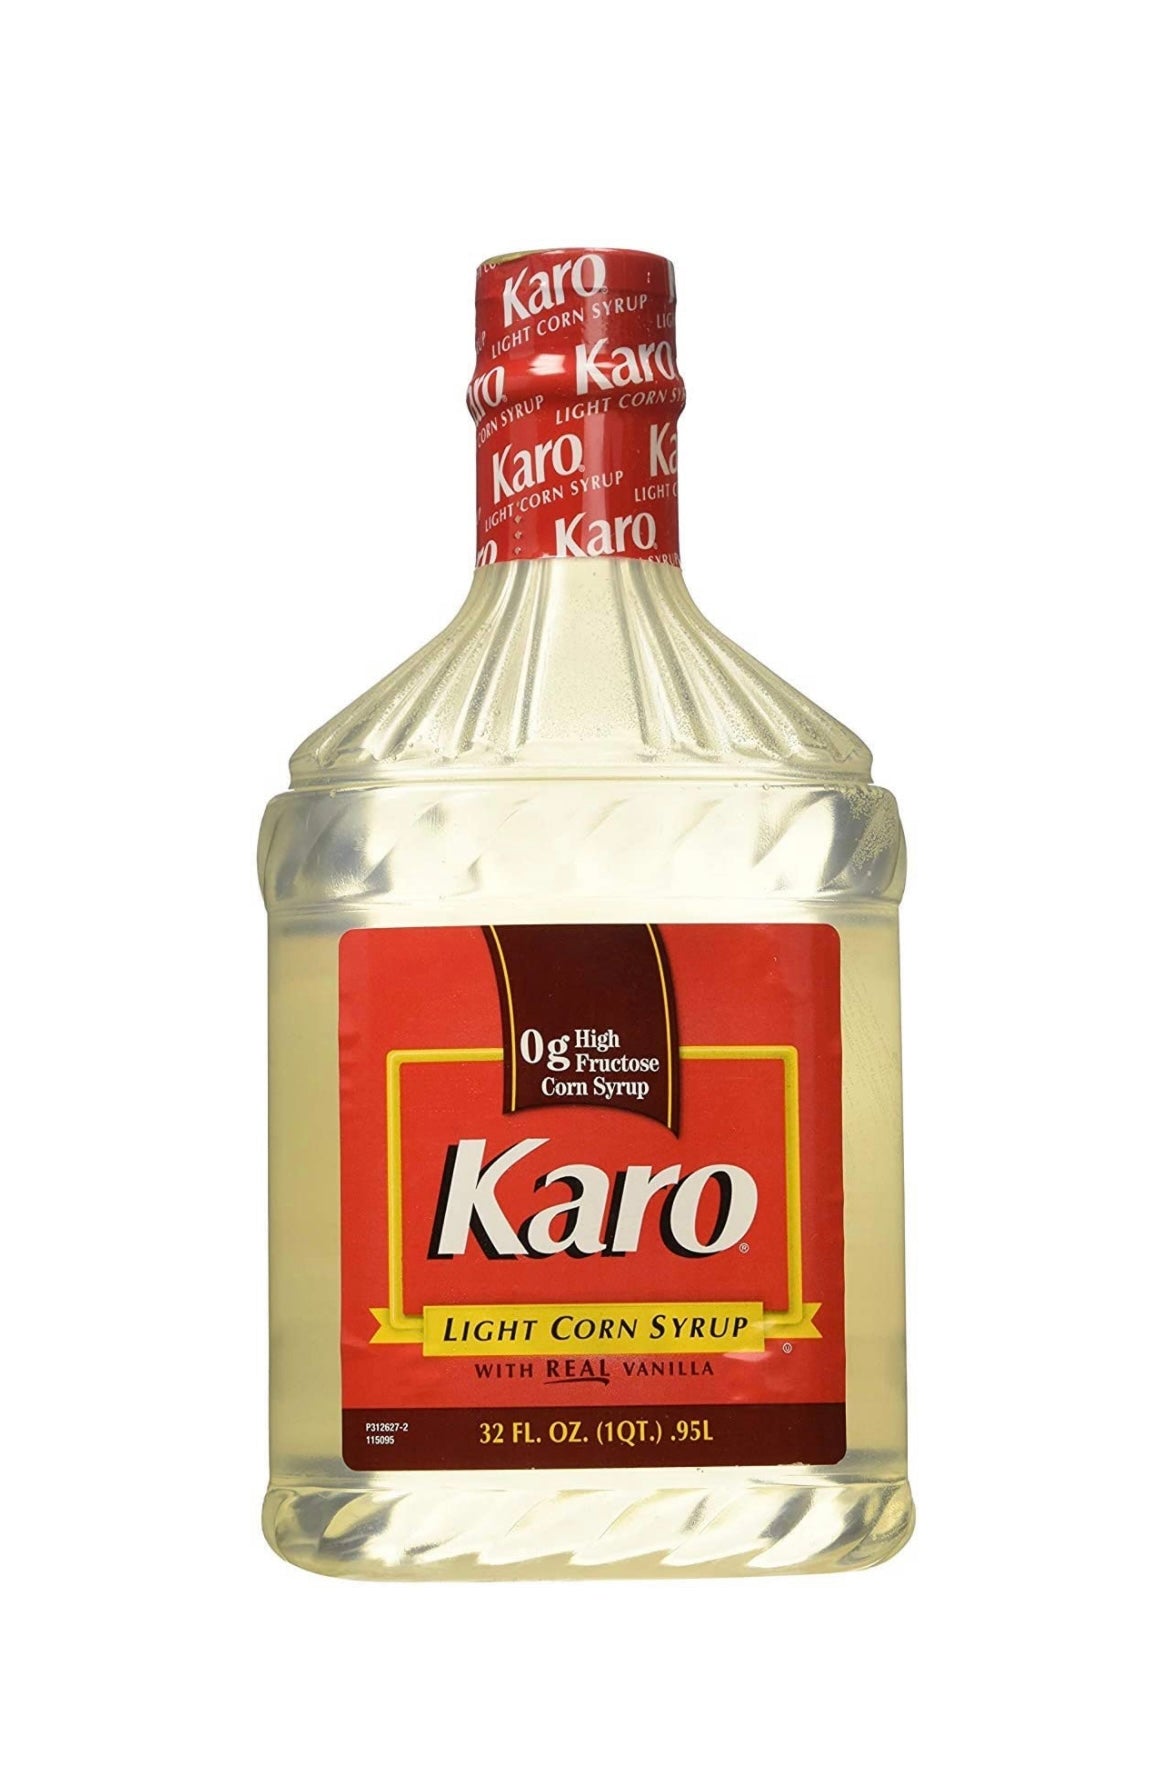 Karo light corn syrup